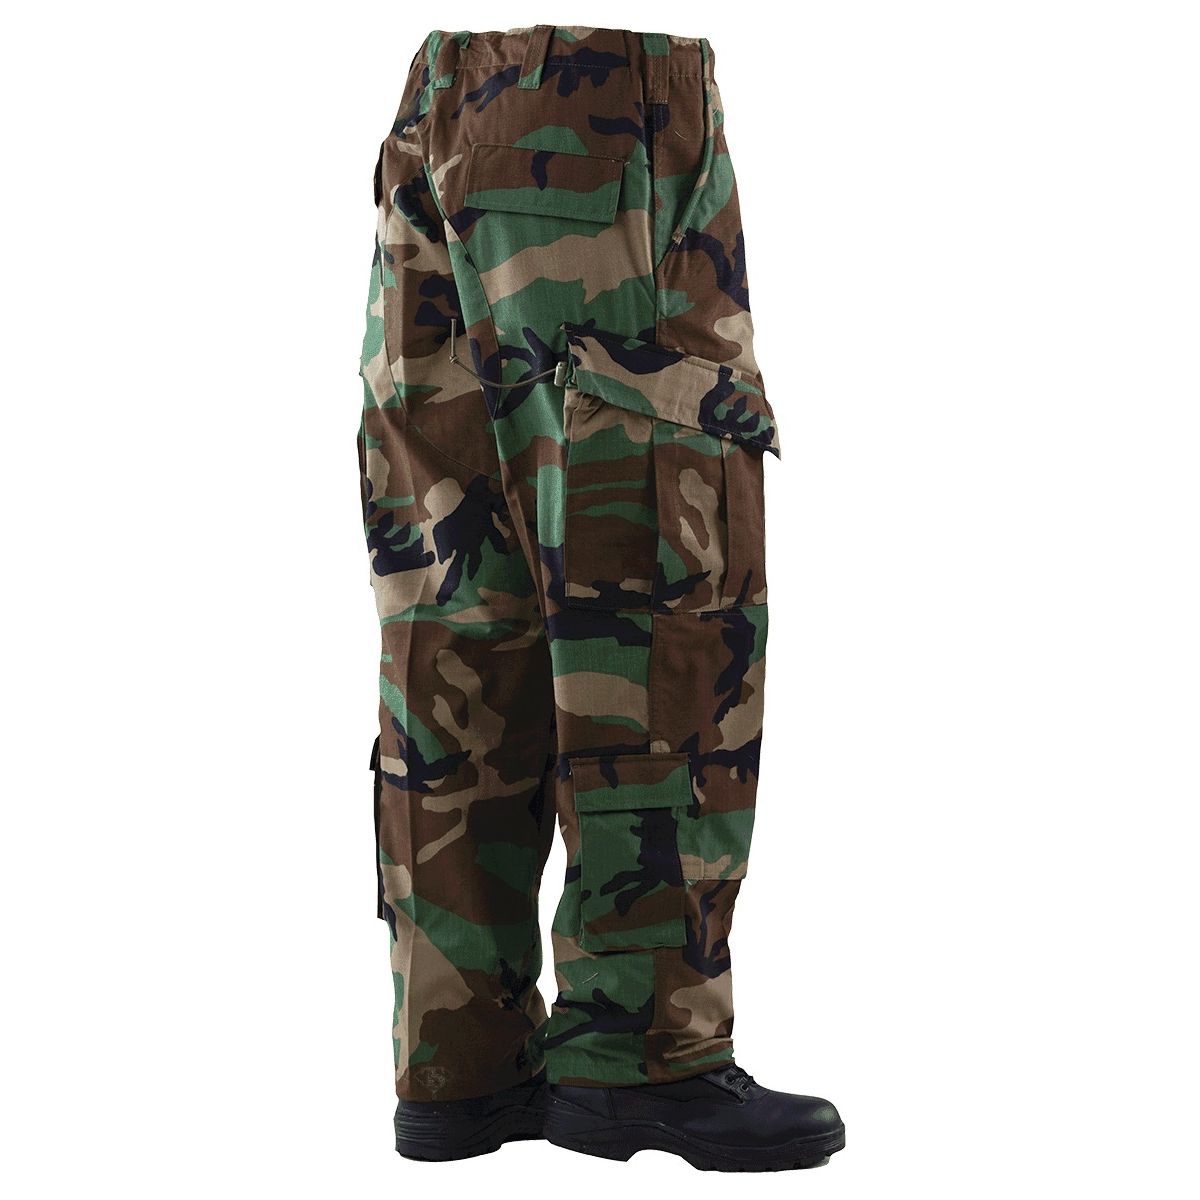 TRU-SPEC Tactical Pants TRU rip-stop WOODLAND | Army surplus MILITARY RANGE